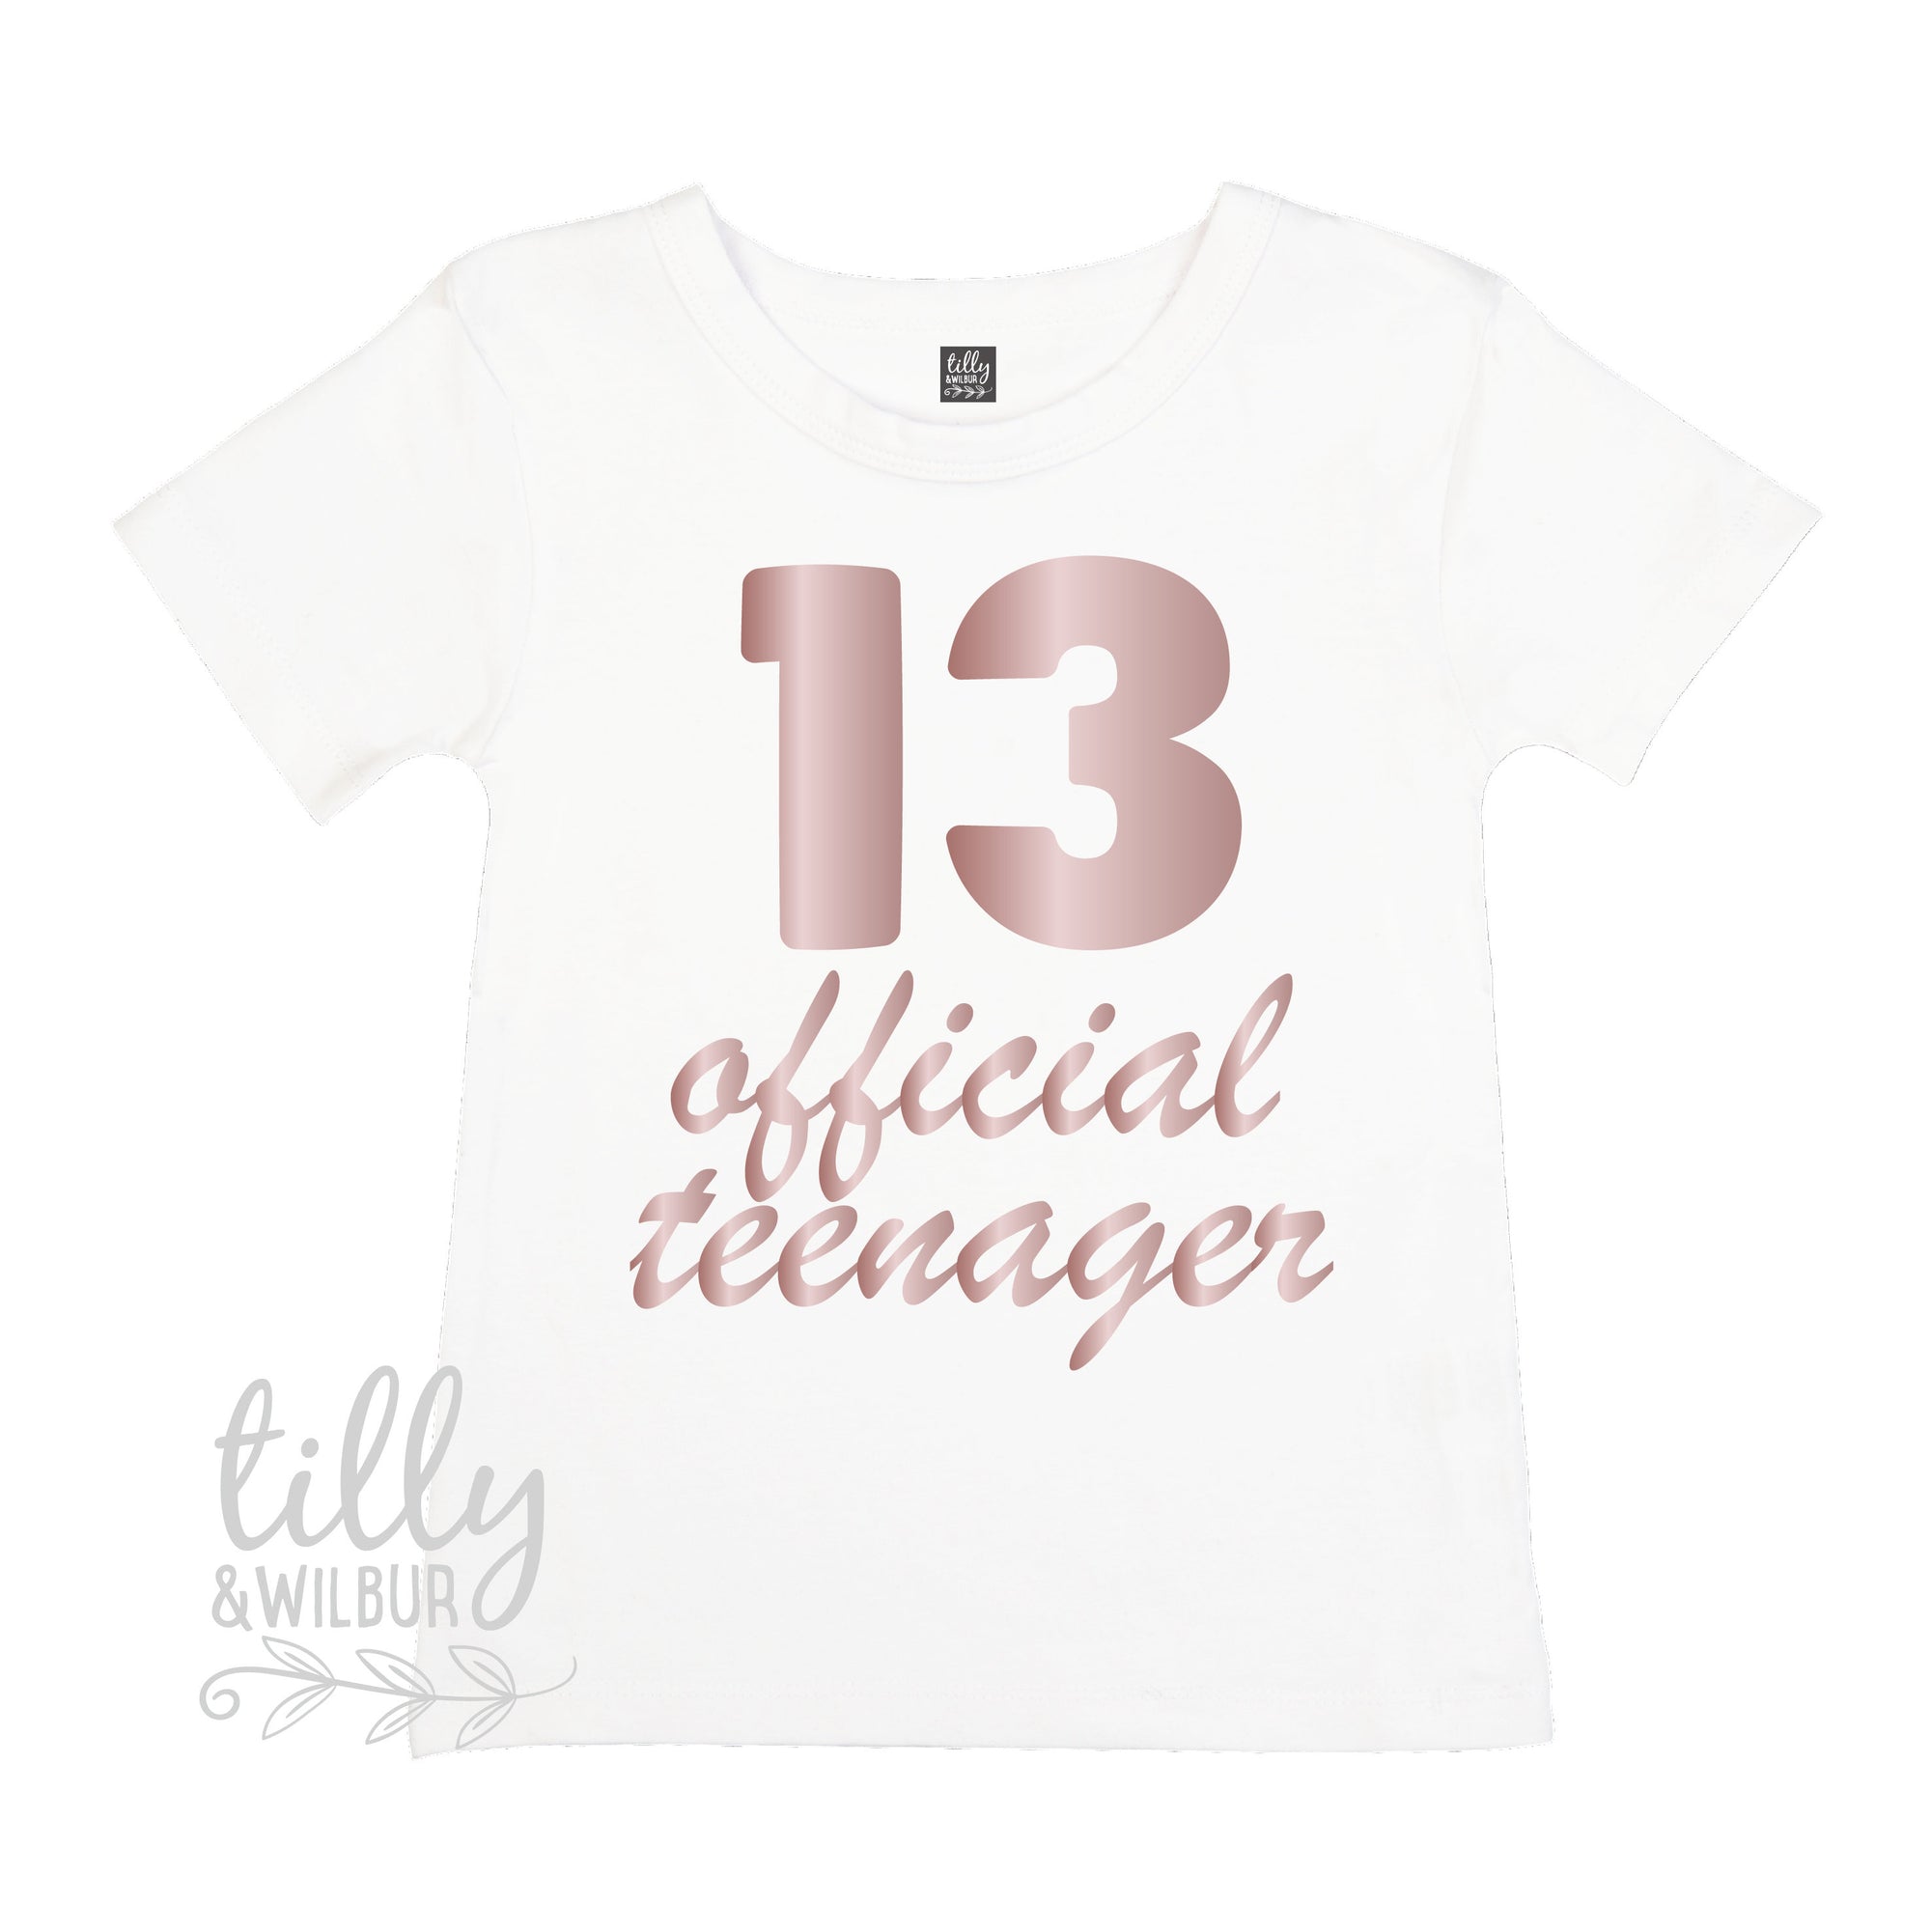 13 Official Teenager T-Shirt, 13th Birthday T-Shirt, Teenager T-Shirt, Officially A Teenager T-Shirt, Teenage Birthday Gift, 13th Birthday